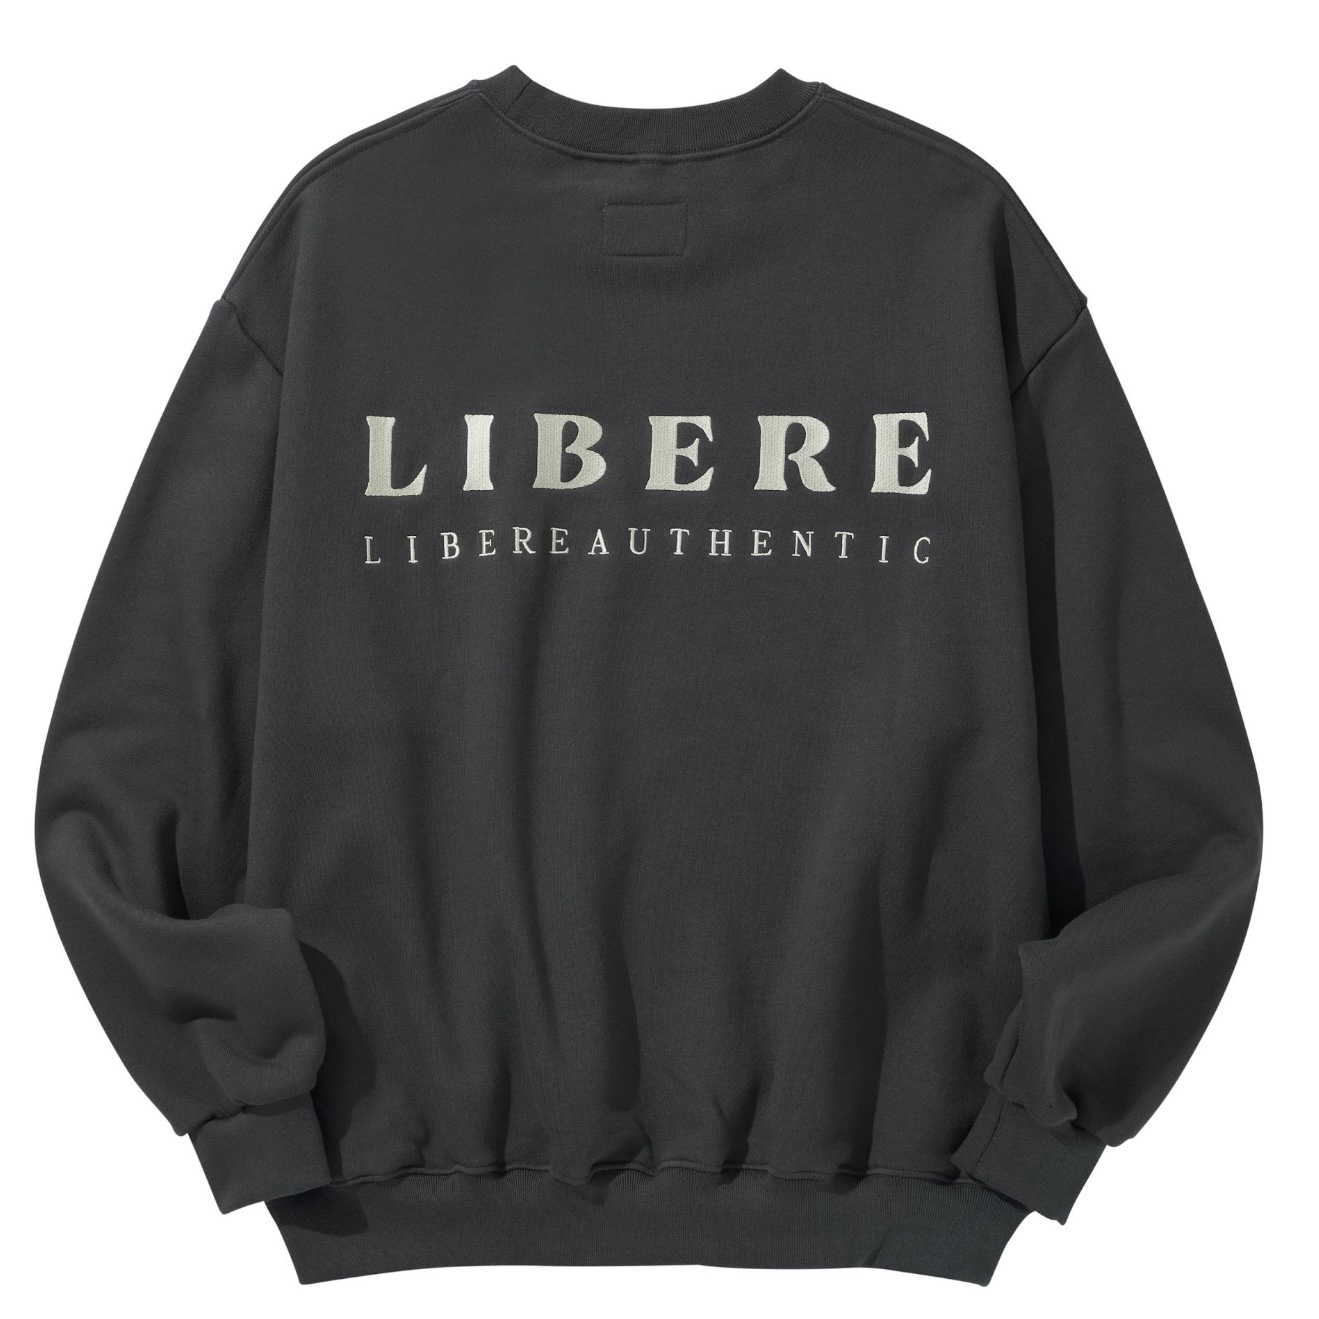 【LIBERE】リベーレ / LOGO SWEATSHIRT / ロゴ刺繍スウェットトレーナー /  CHARCOAL